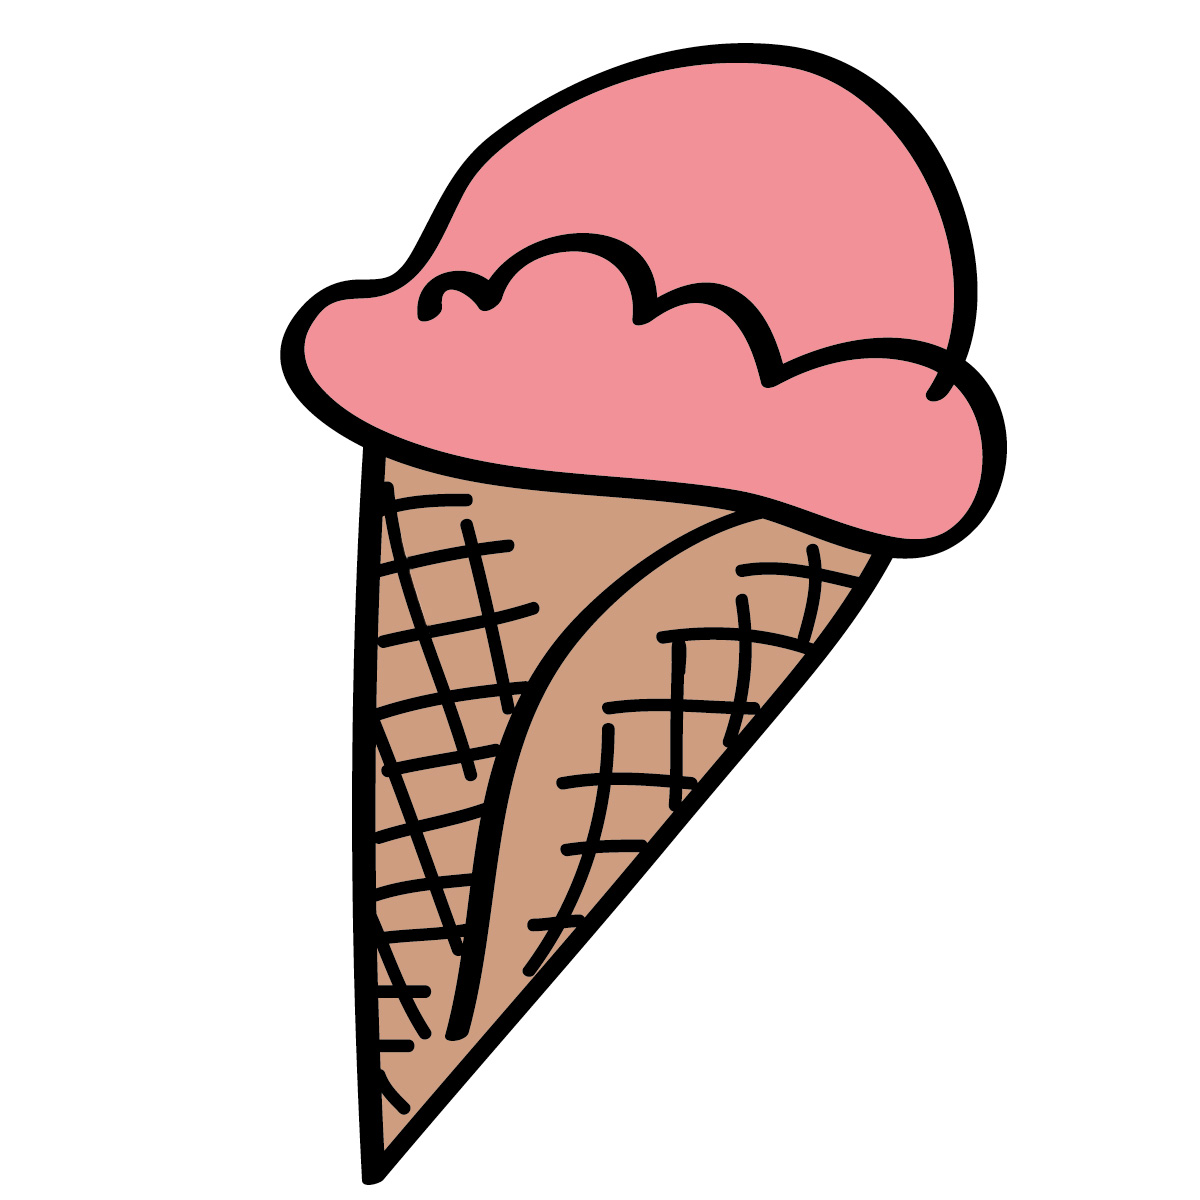 ice cream sundae clipart images - photo #37